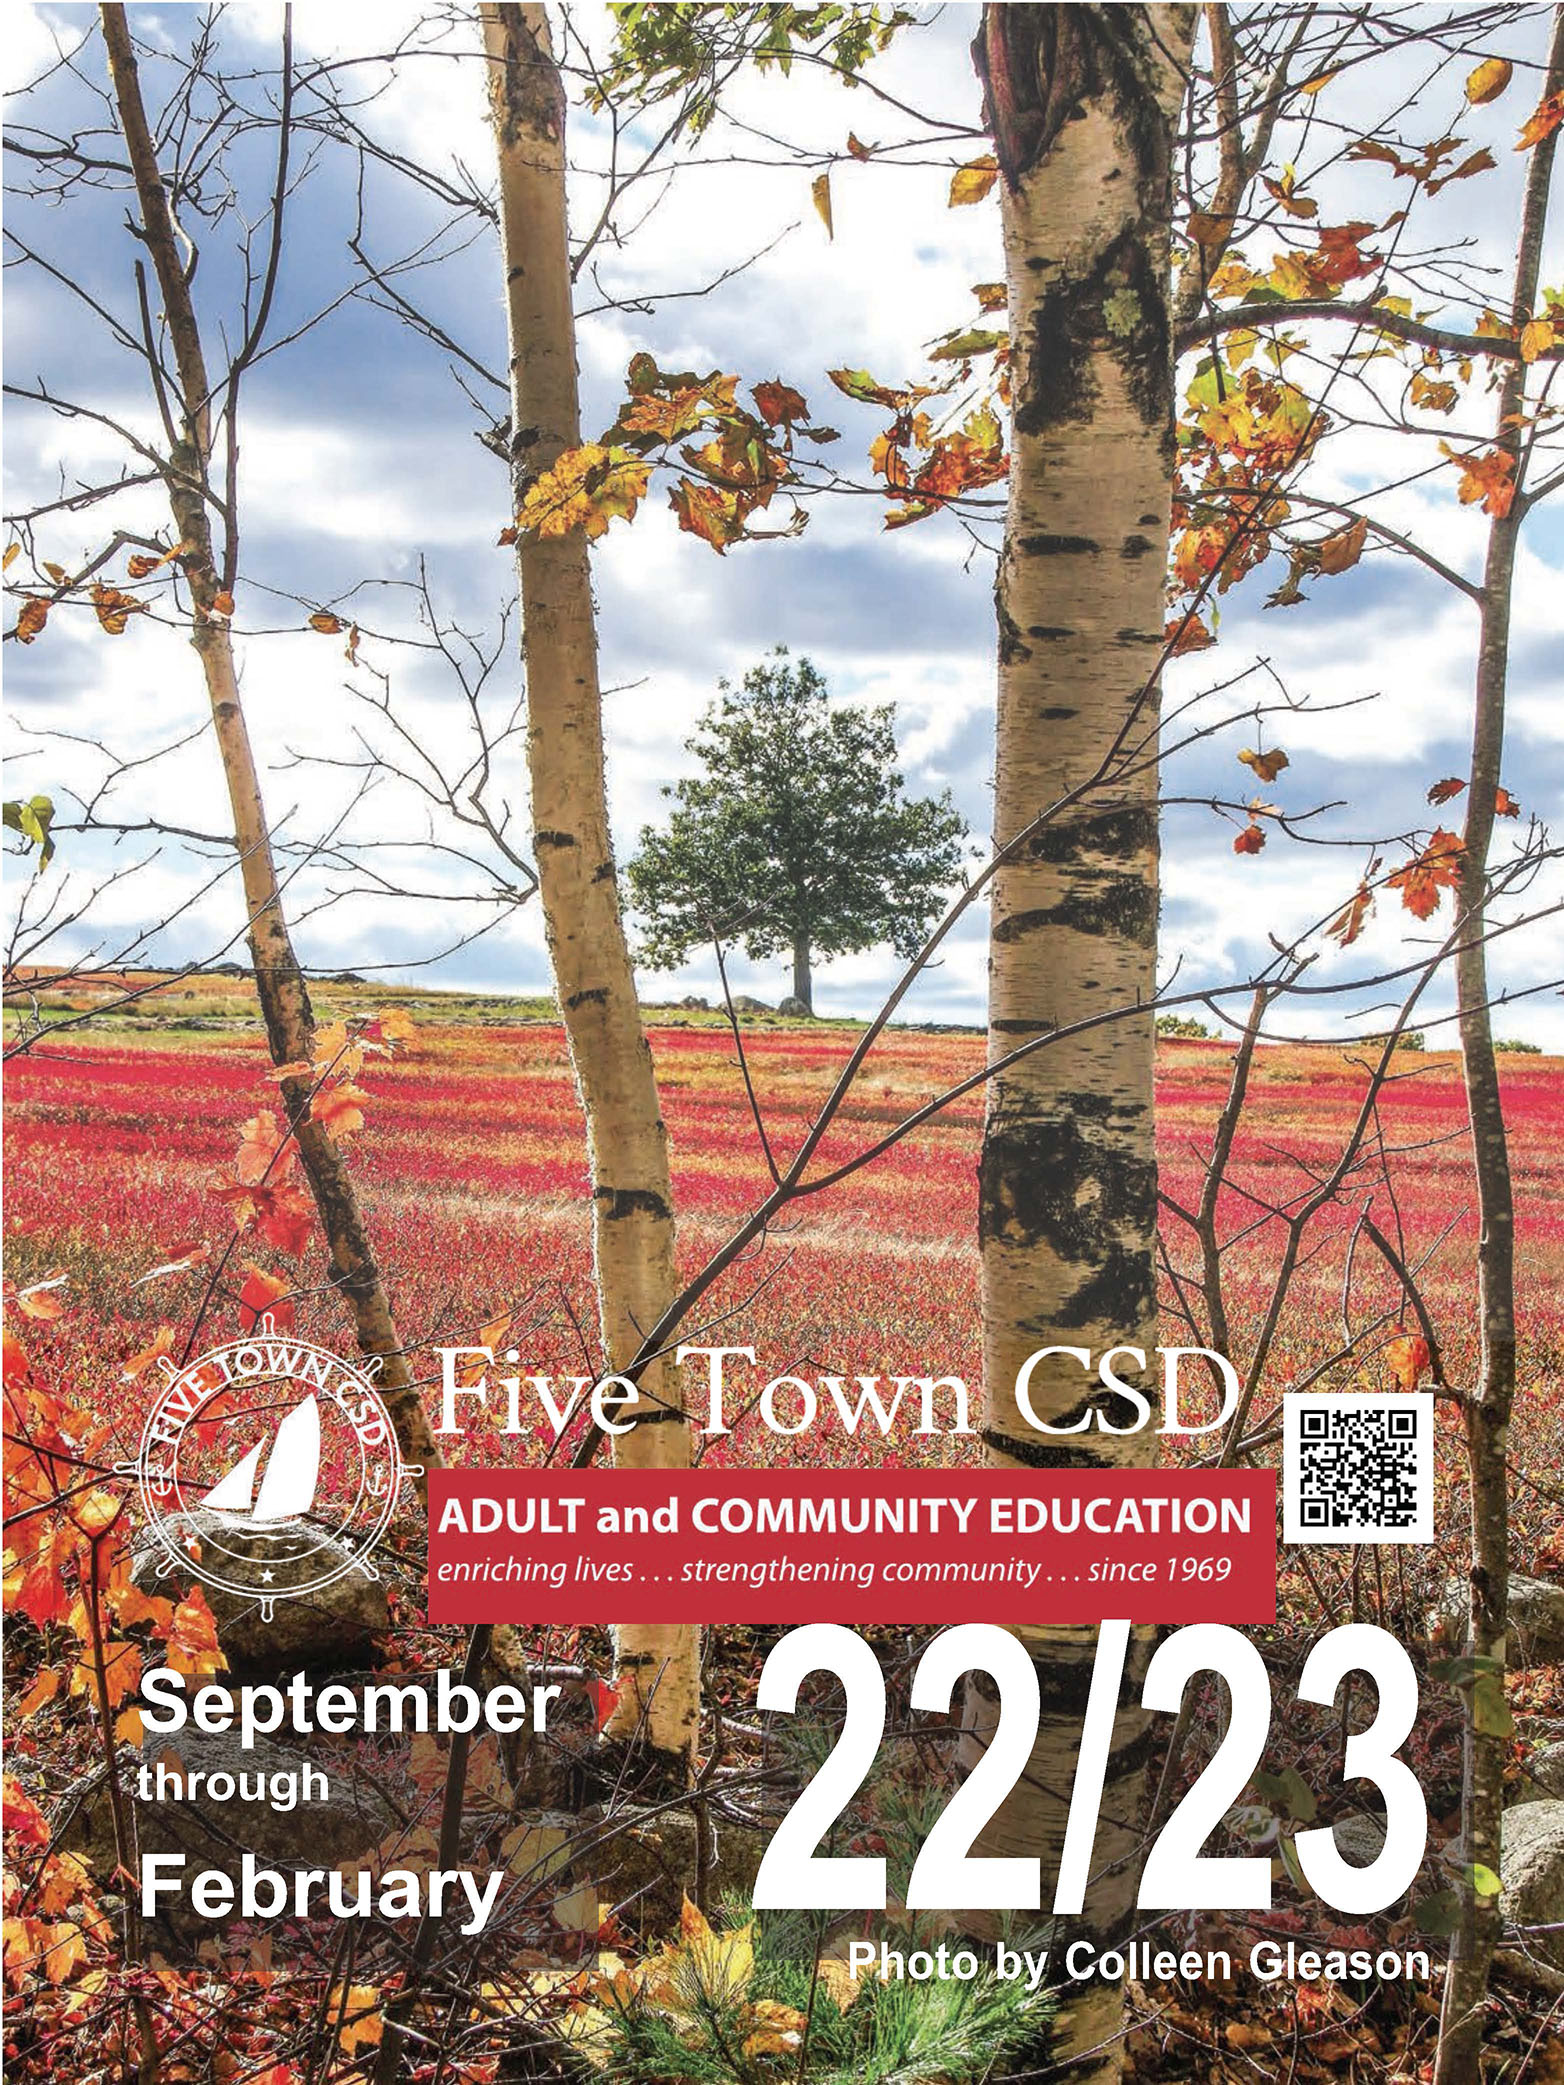 Five Town CSD Adult & Community Education image #13970